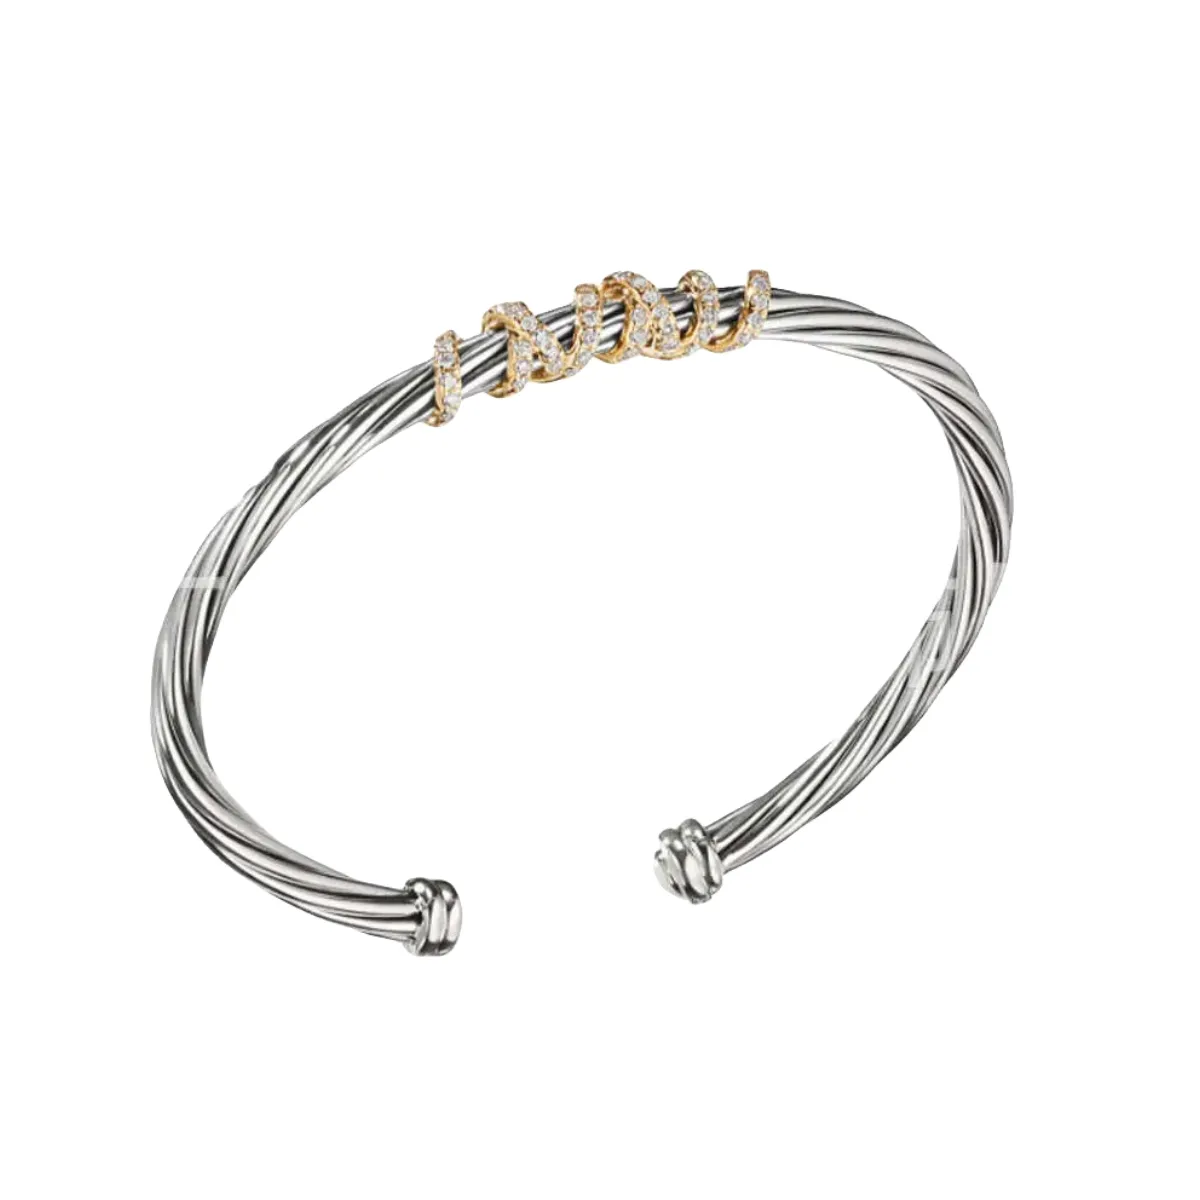 DY Bracelet Jewelry classic designer luxury top accessories dy Bracelets New Line Twisted Thread Zircon Binding Fashion Versatile DY Jewelry Accessories gift